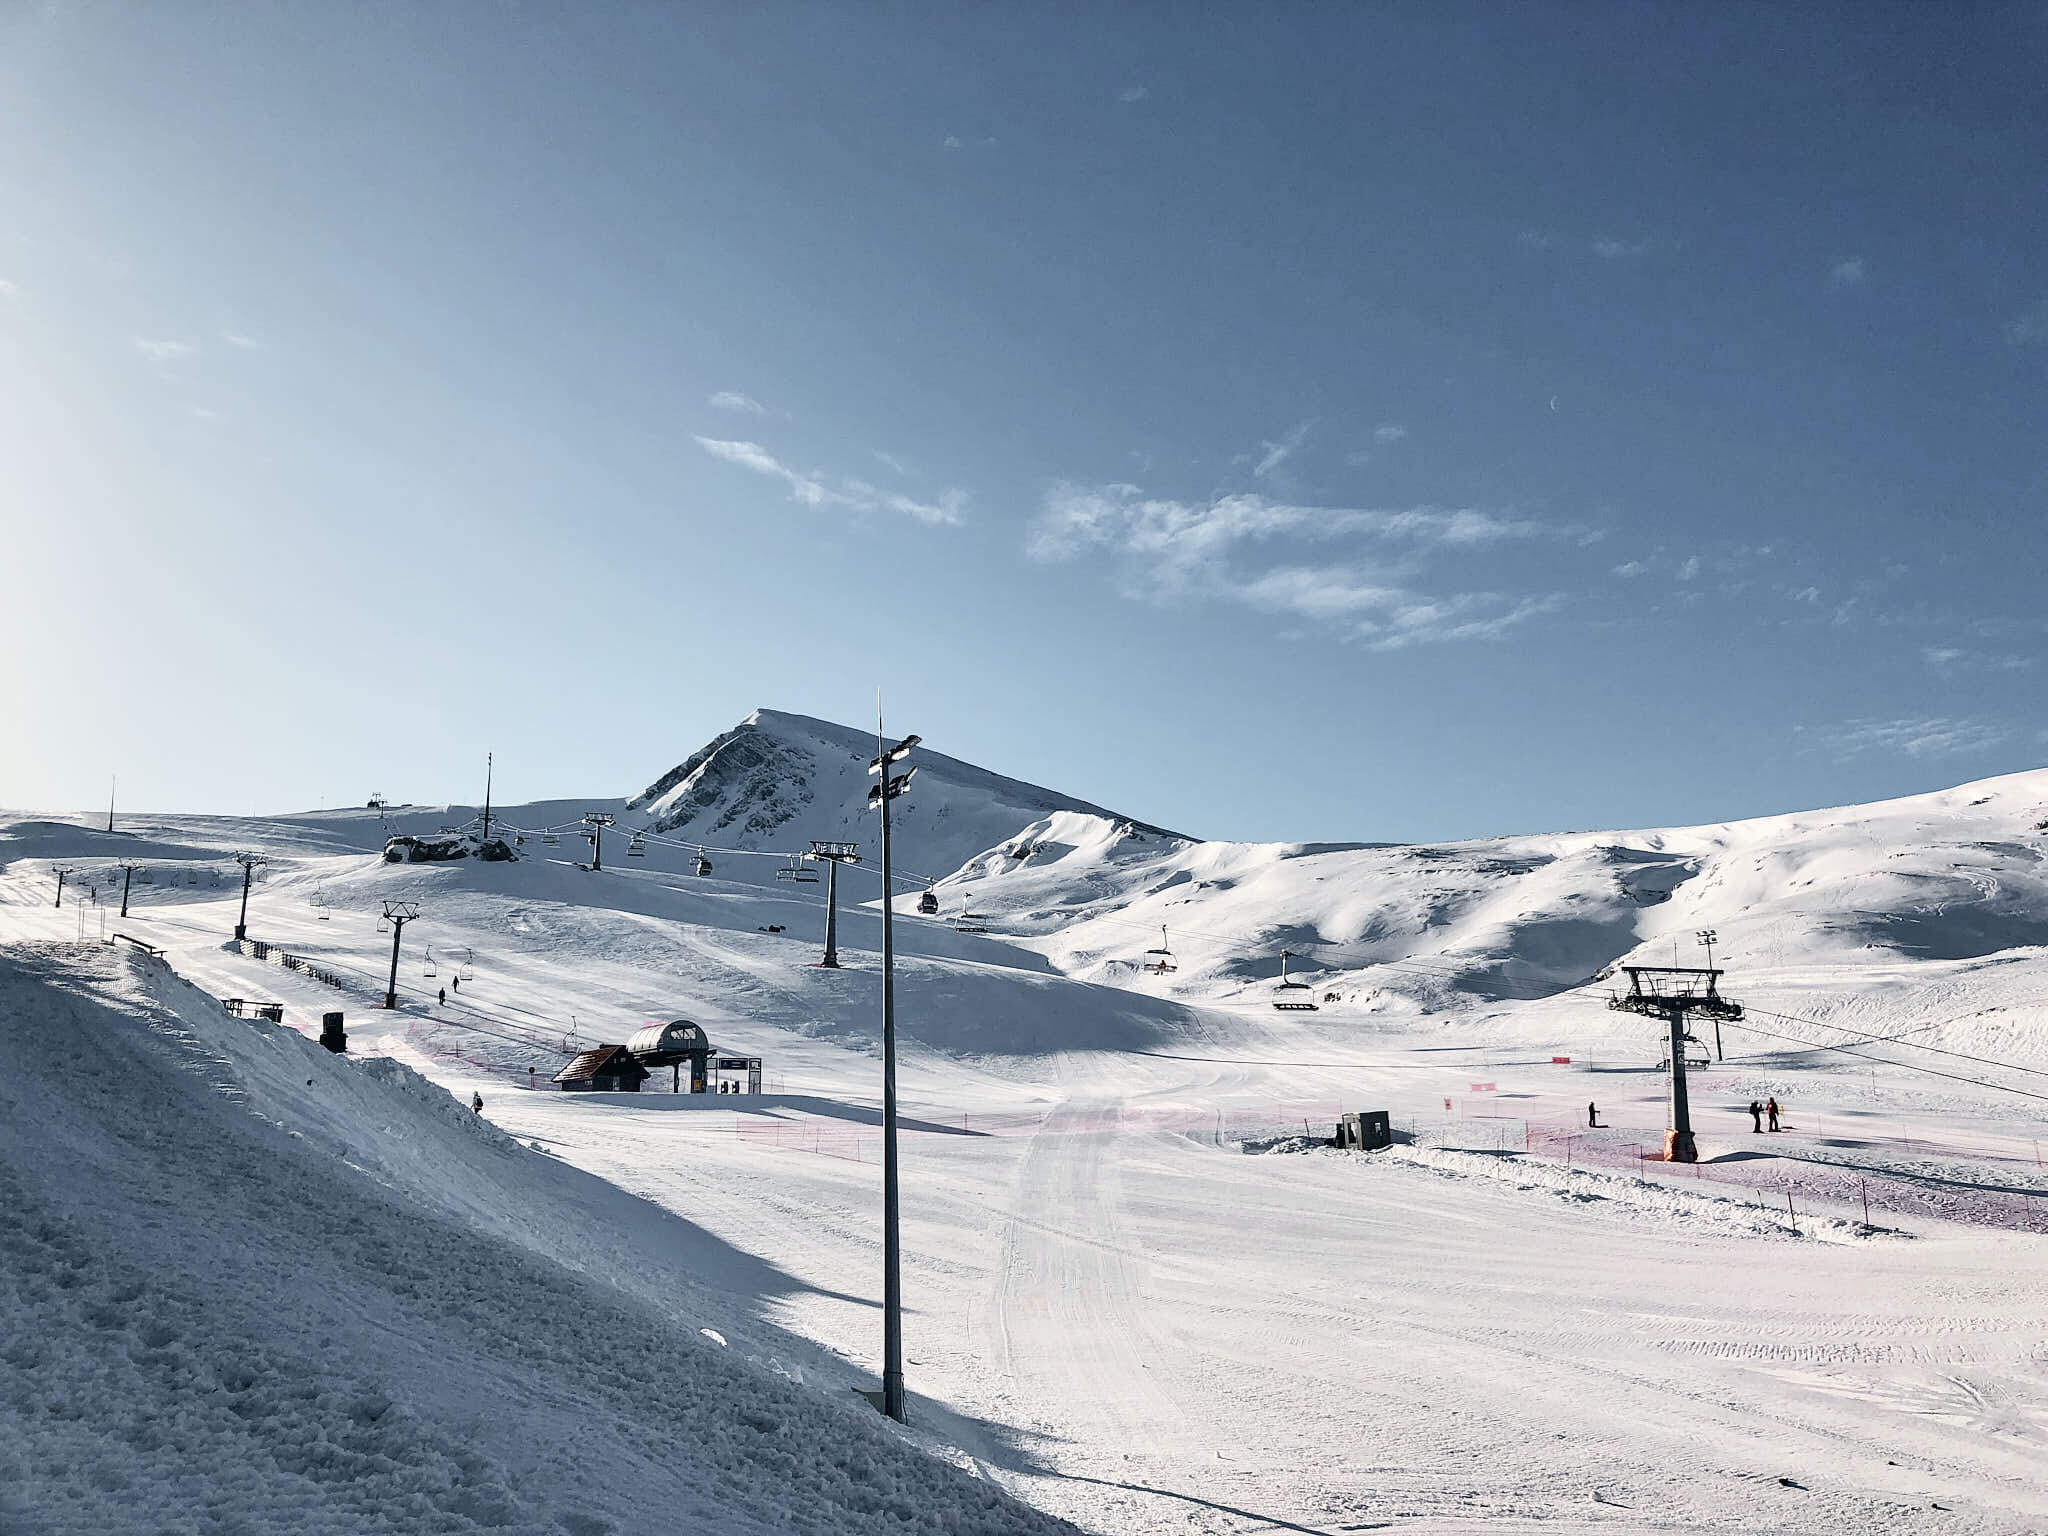 Article117 greece mount parnassos ski centre resort 希臘 帕納索斯 雪場 7884